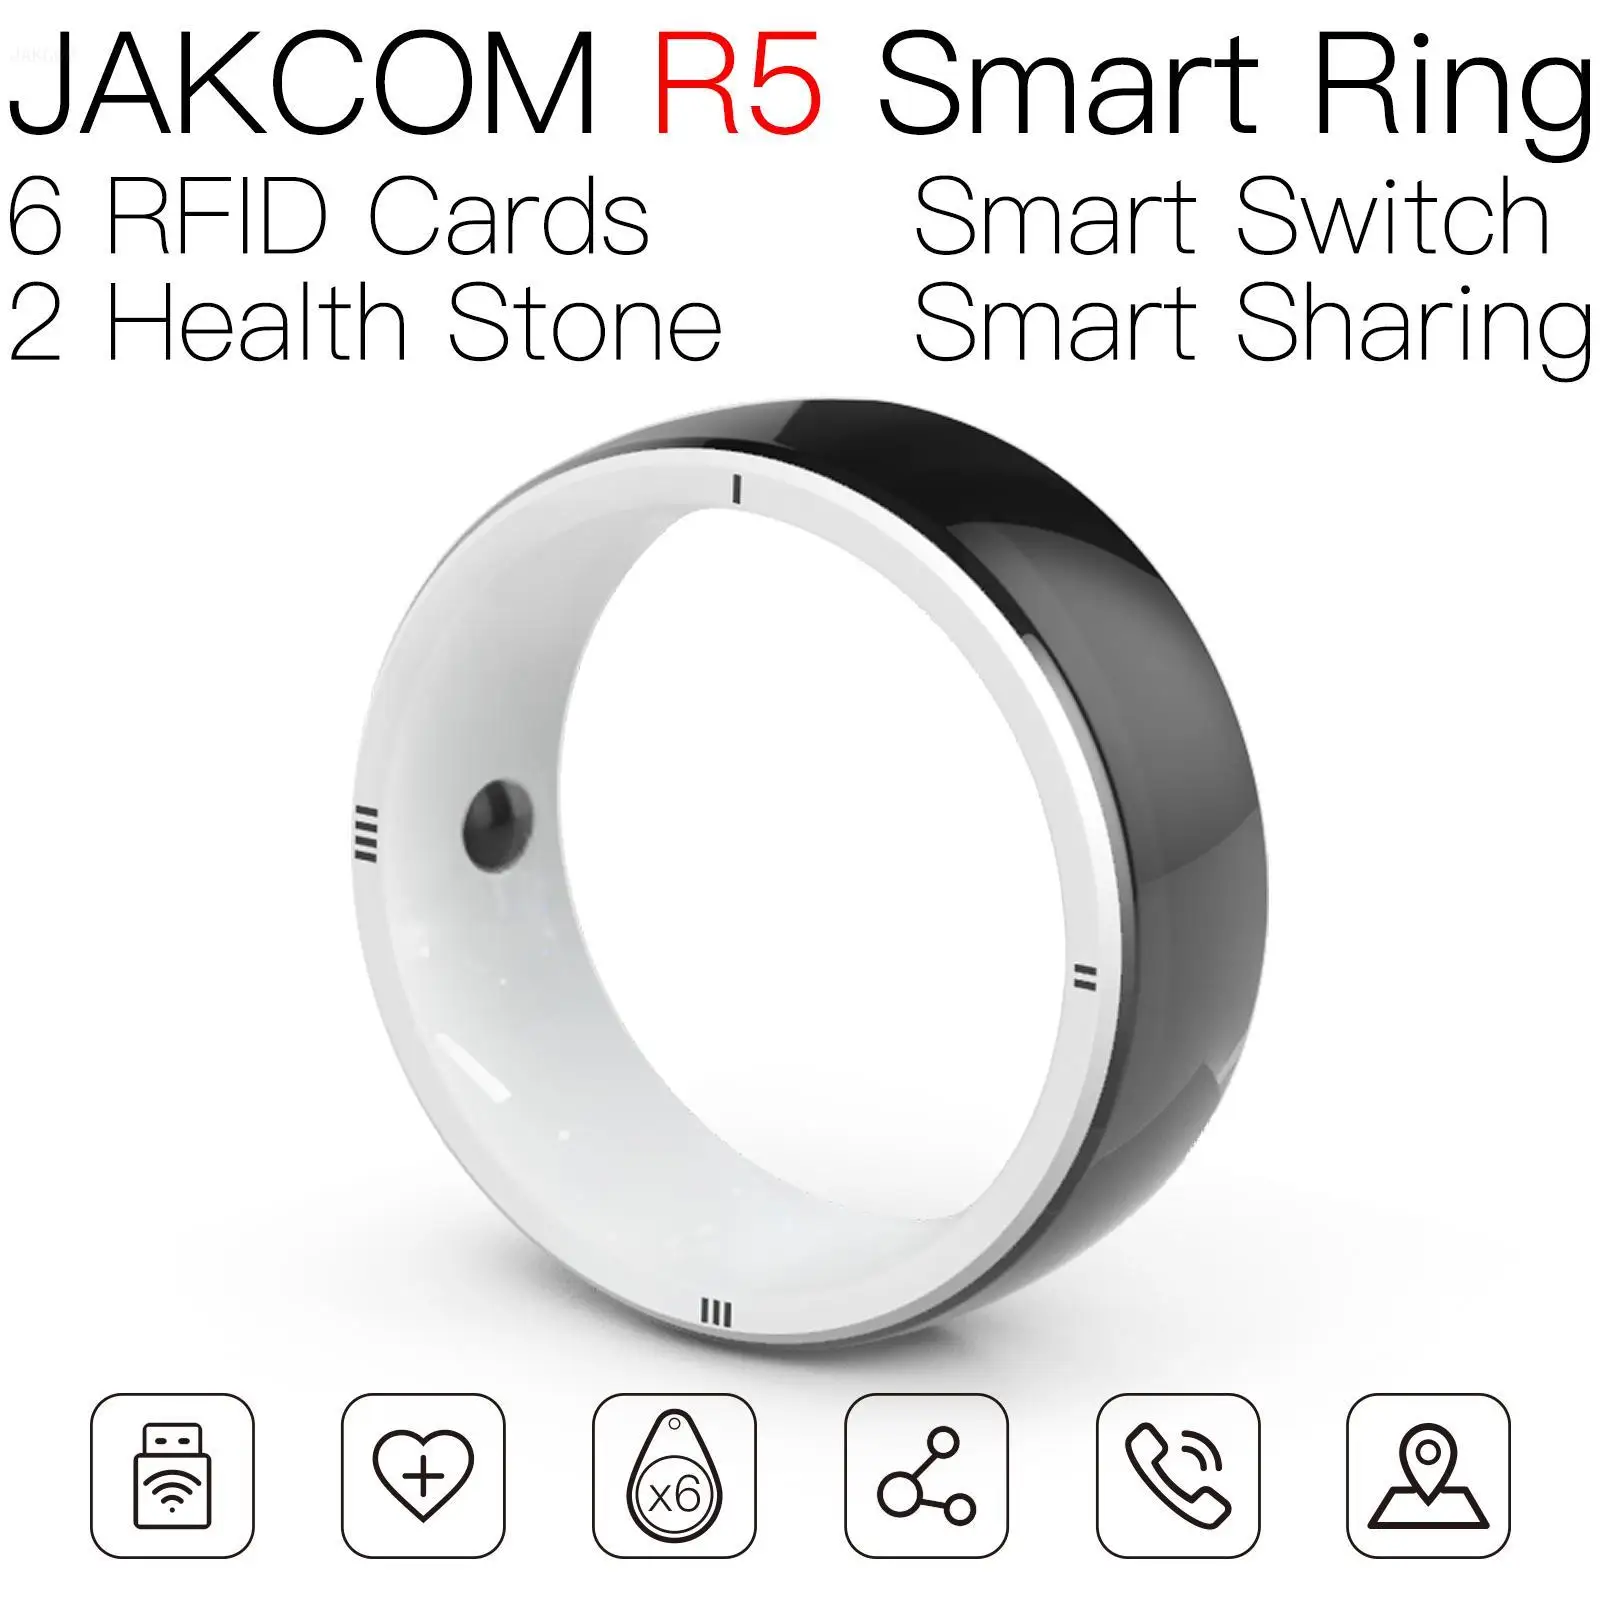 JAKCOM R5 Smart Ring лучше, чем dip mini card программное обеспечение chameleon rfid reader jutai 015 1356 кГц micro chip dog